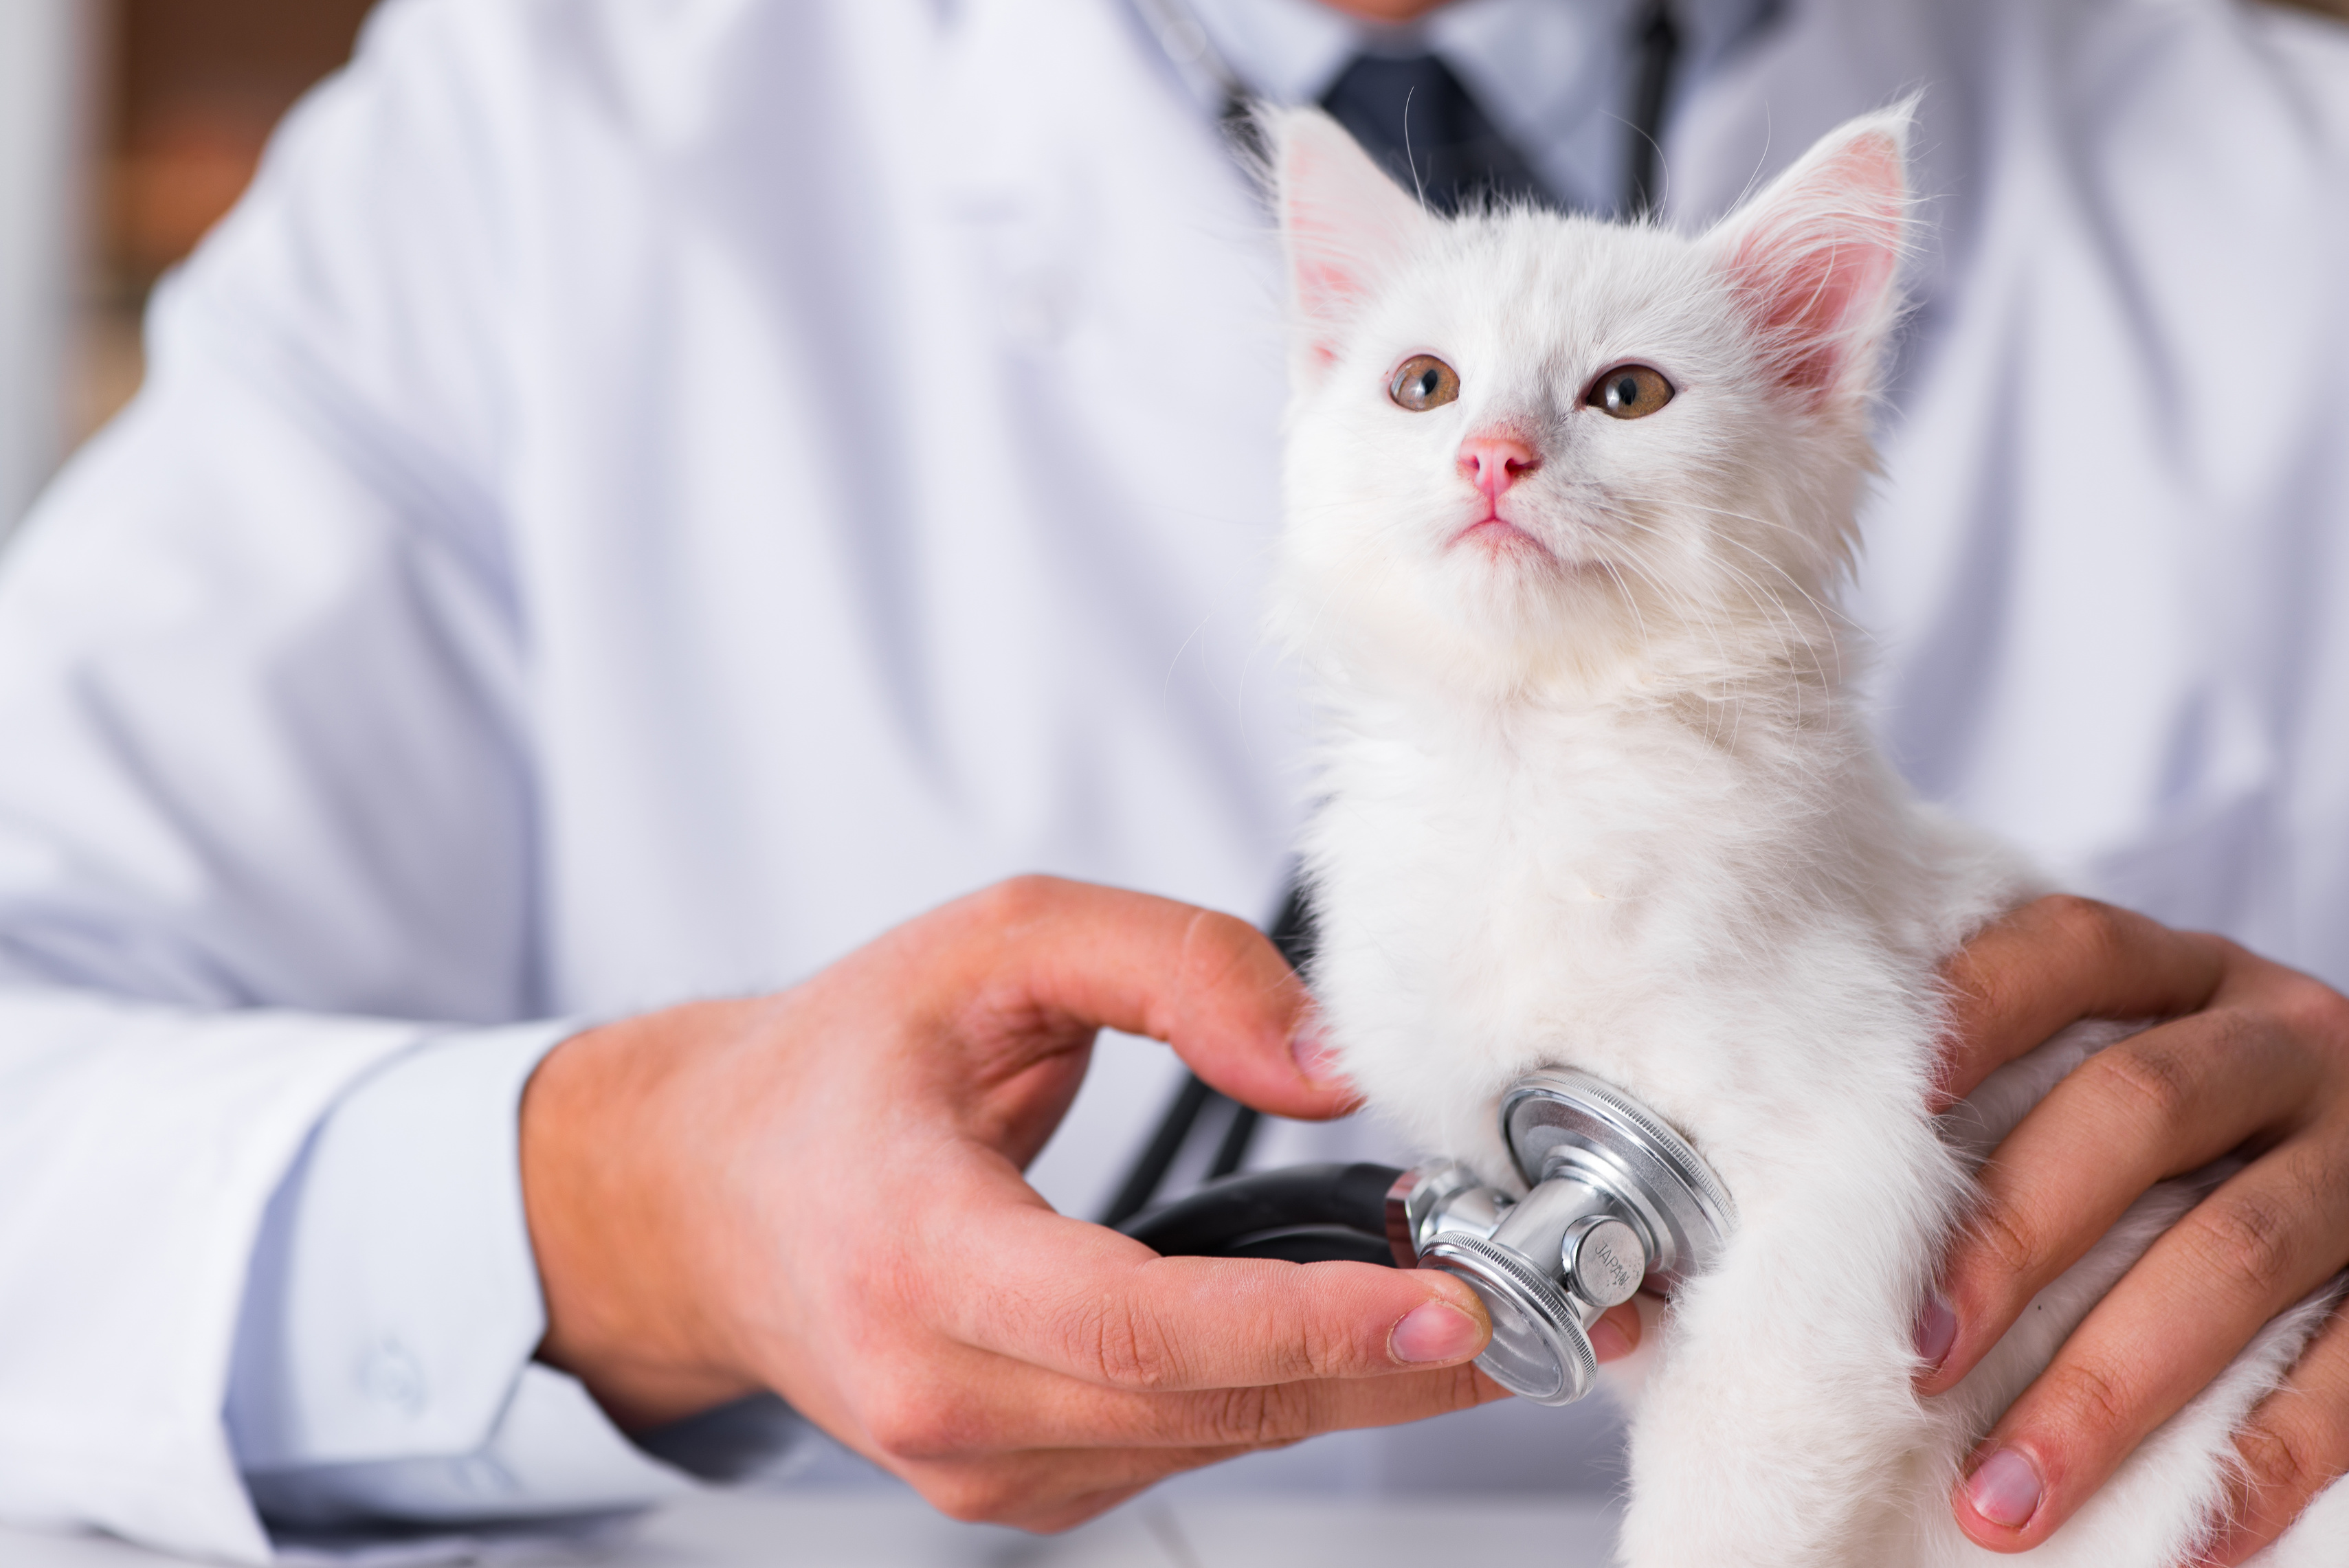 Gatitos: visita veterinario | Magazine para